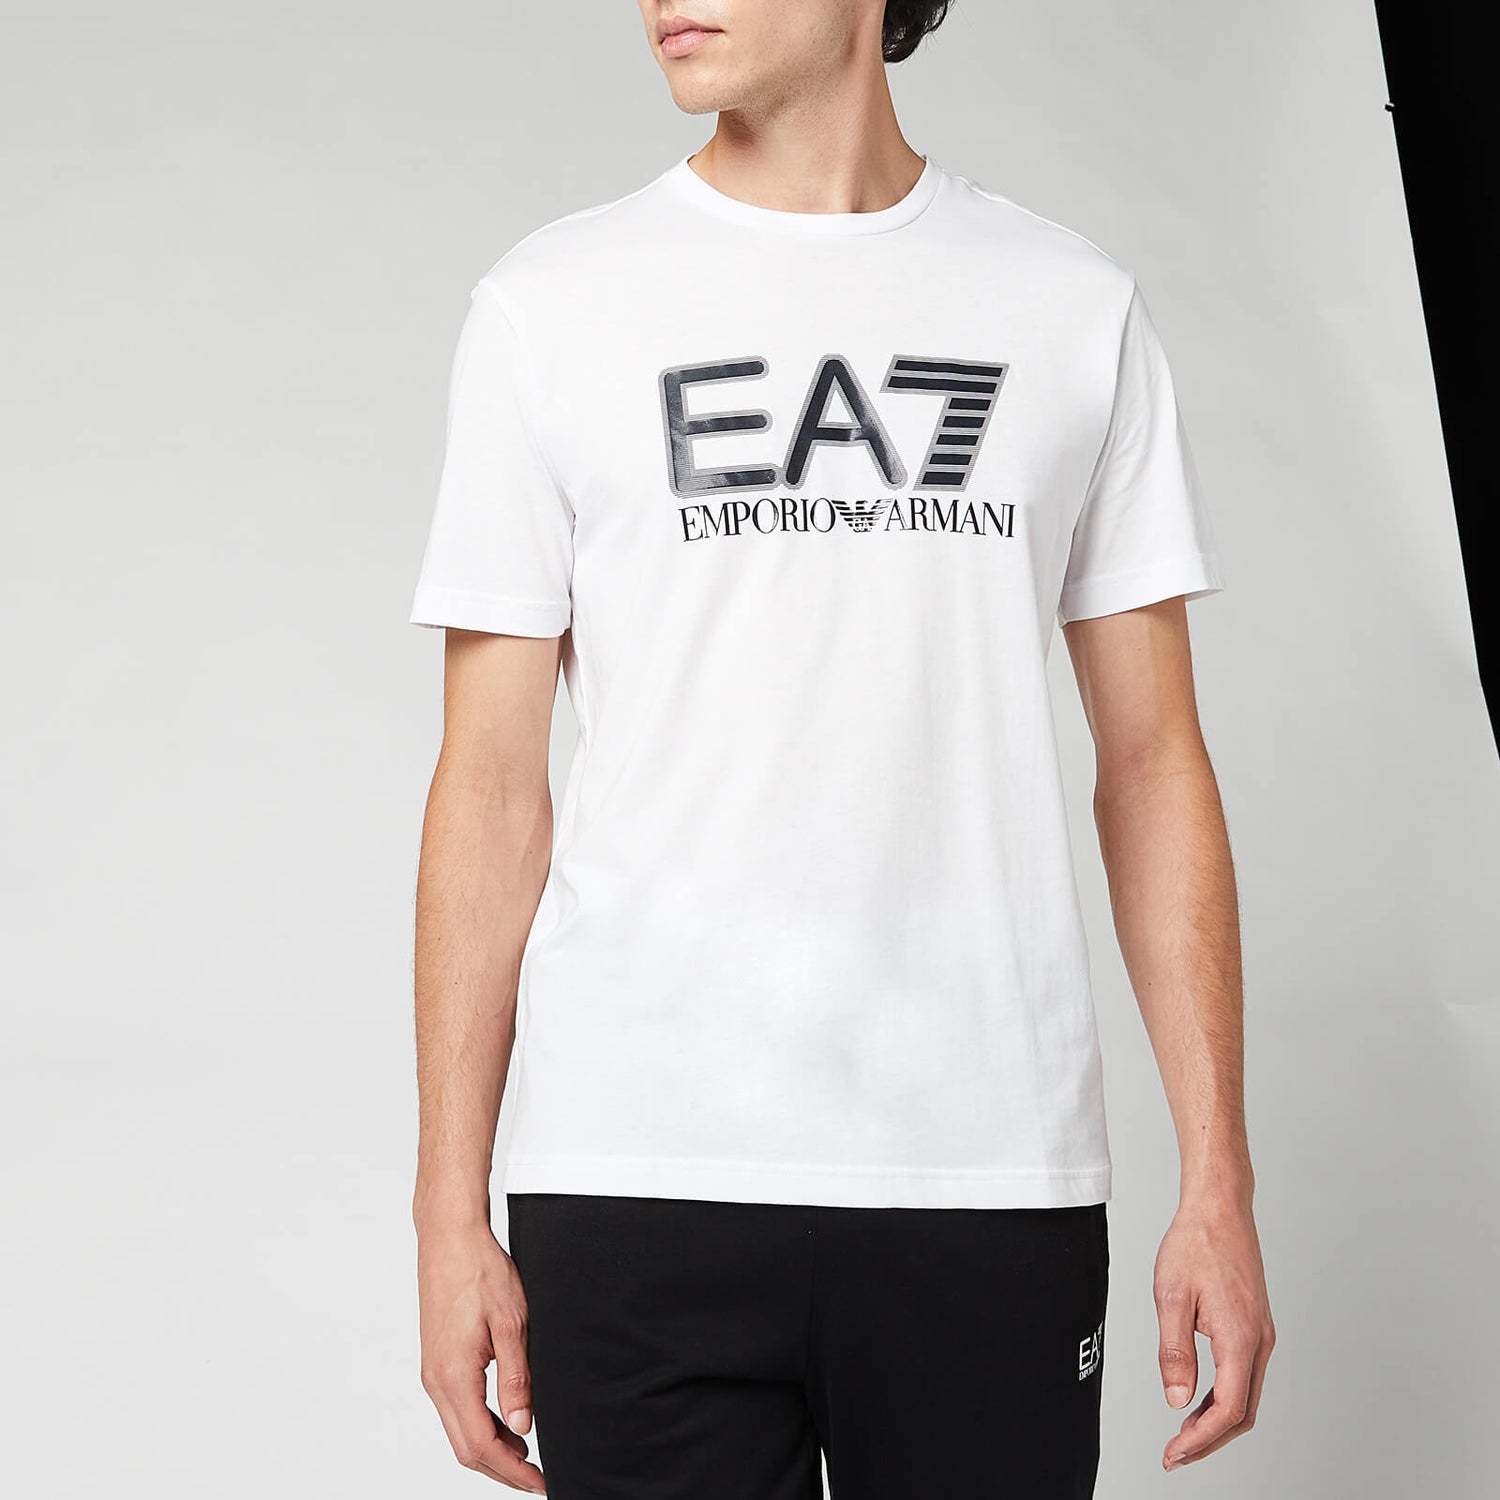 EA7 Men's Visibility T-Shirt - White